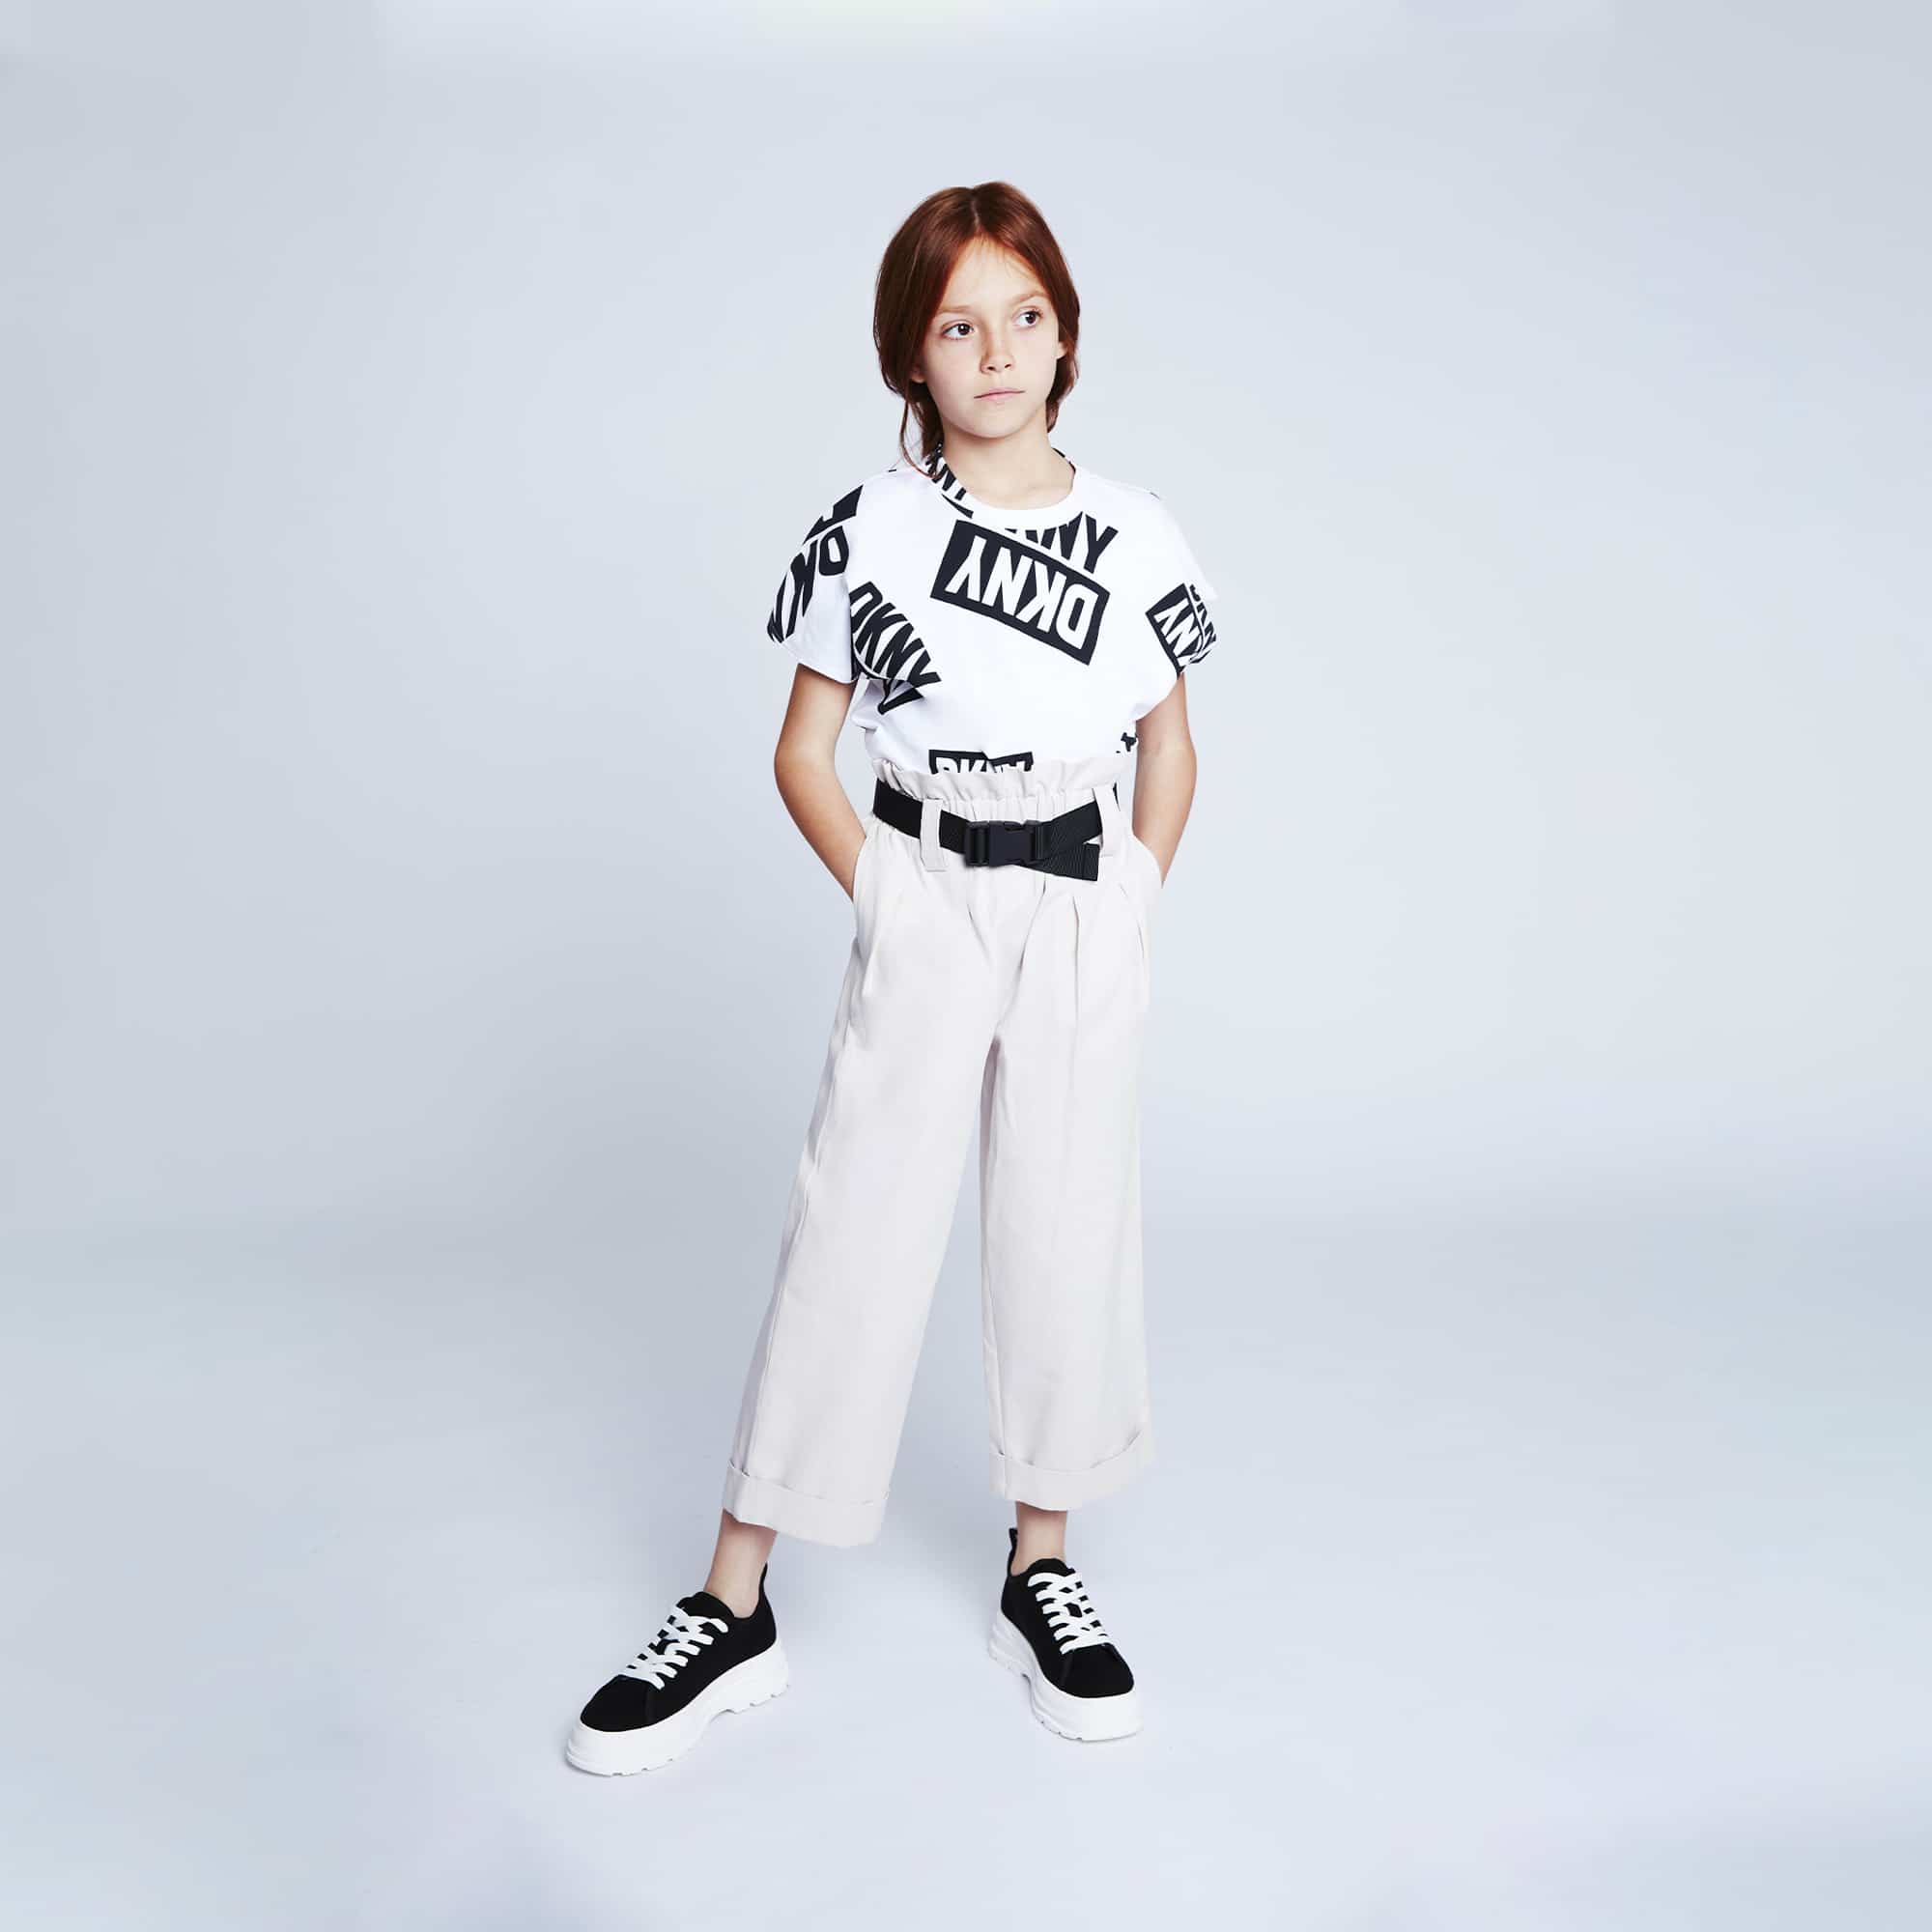 model in DKNY girls tshirt with multiple logos